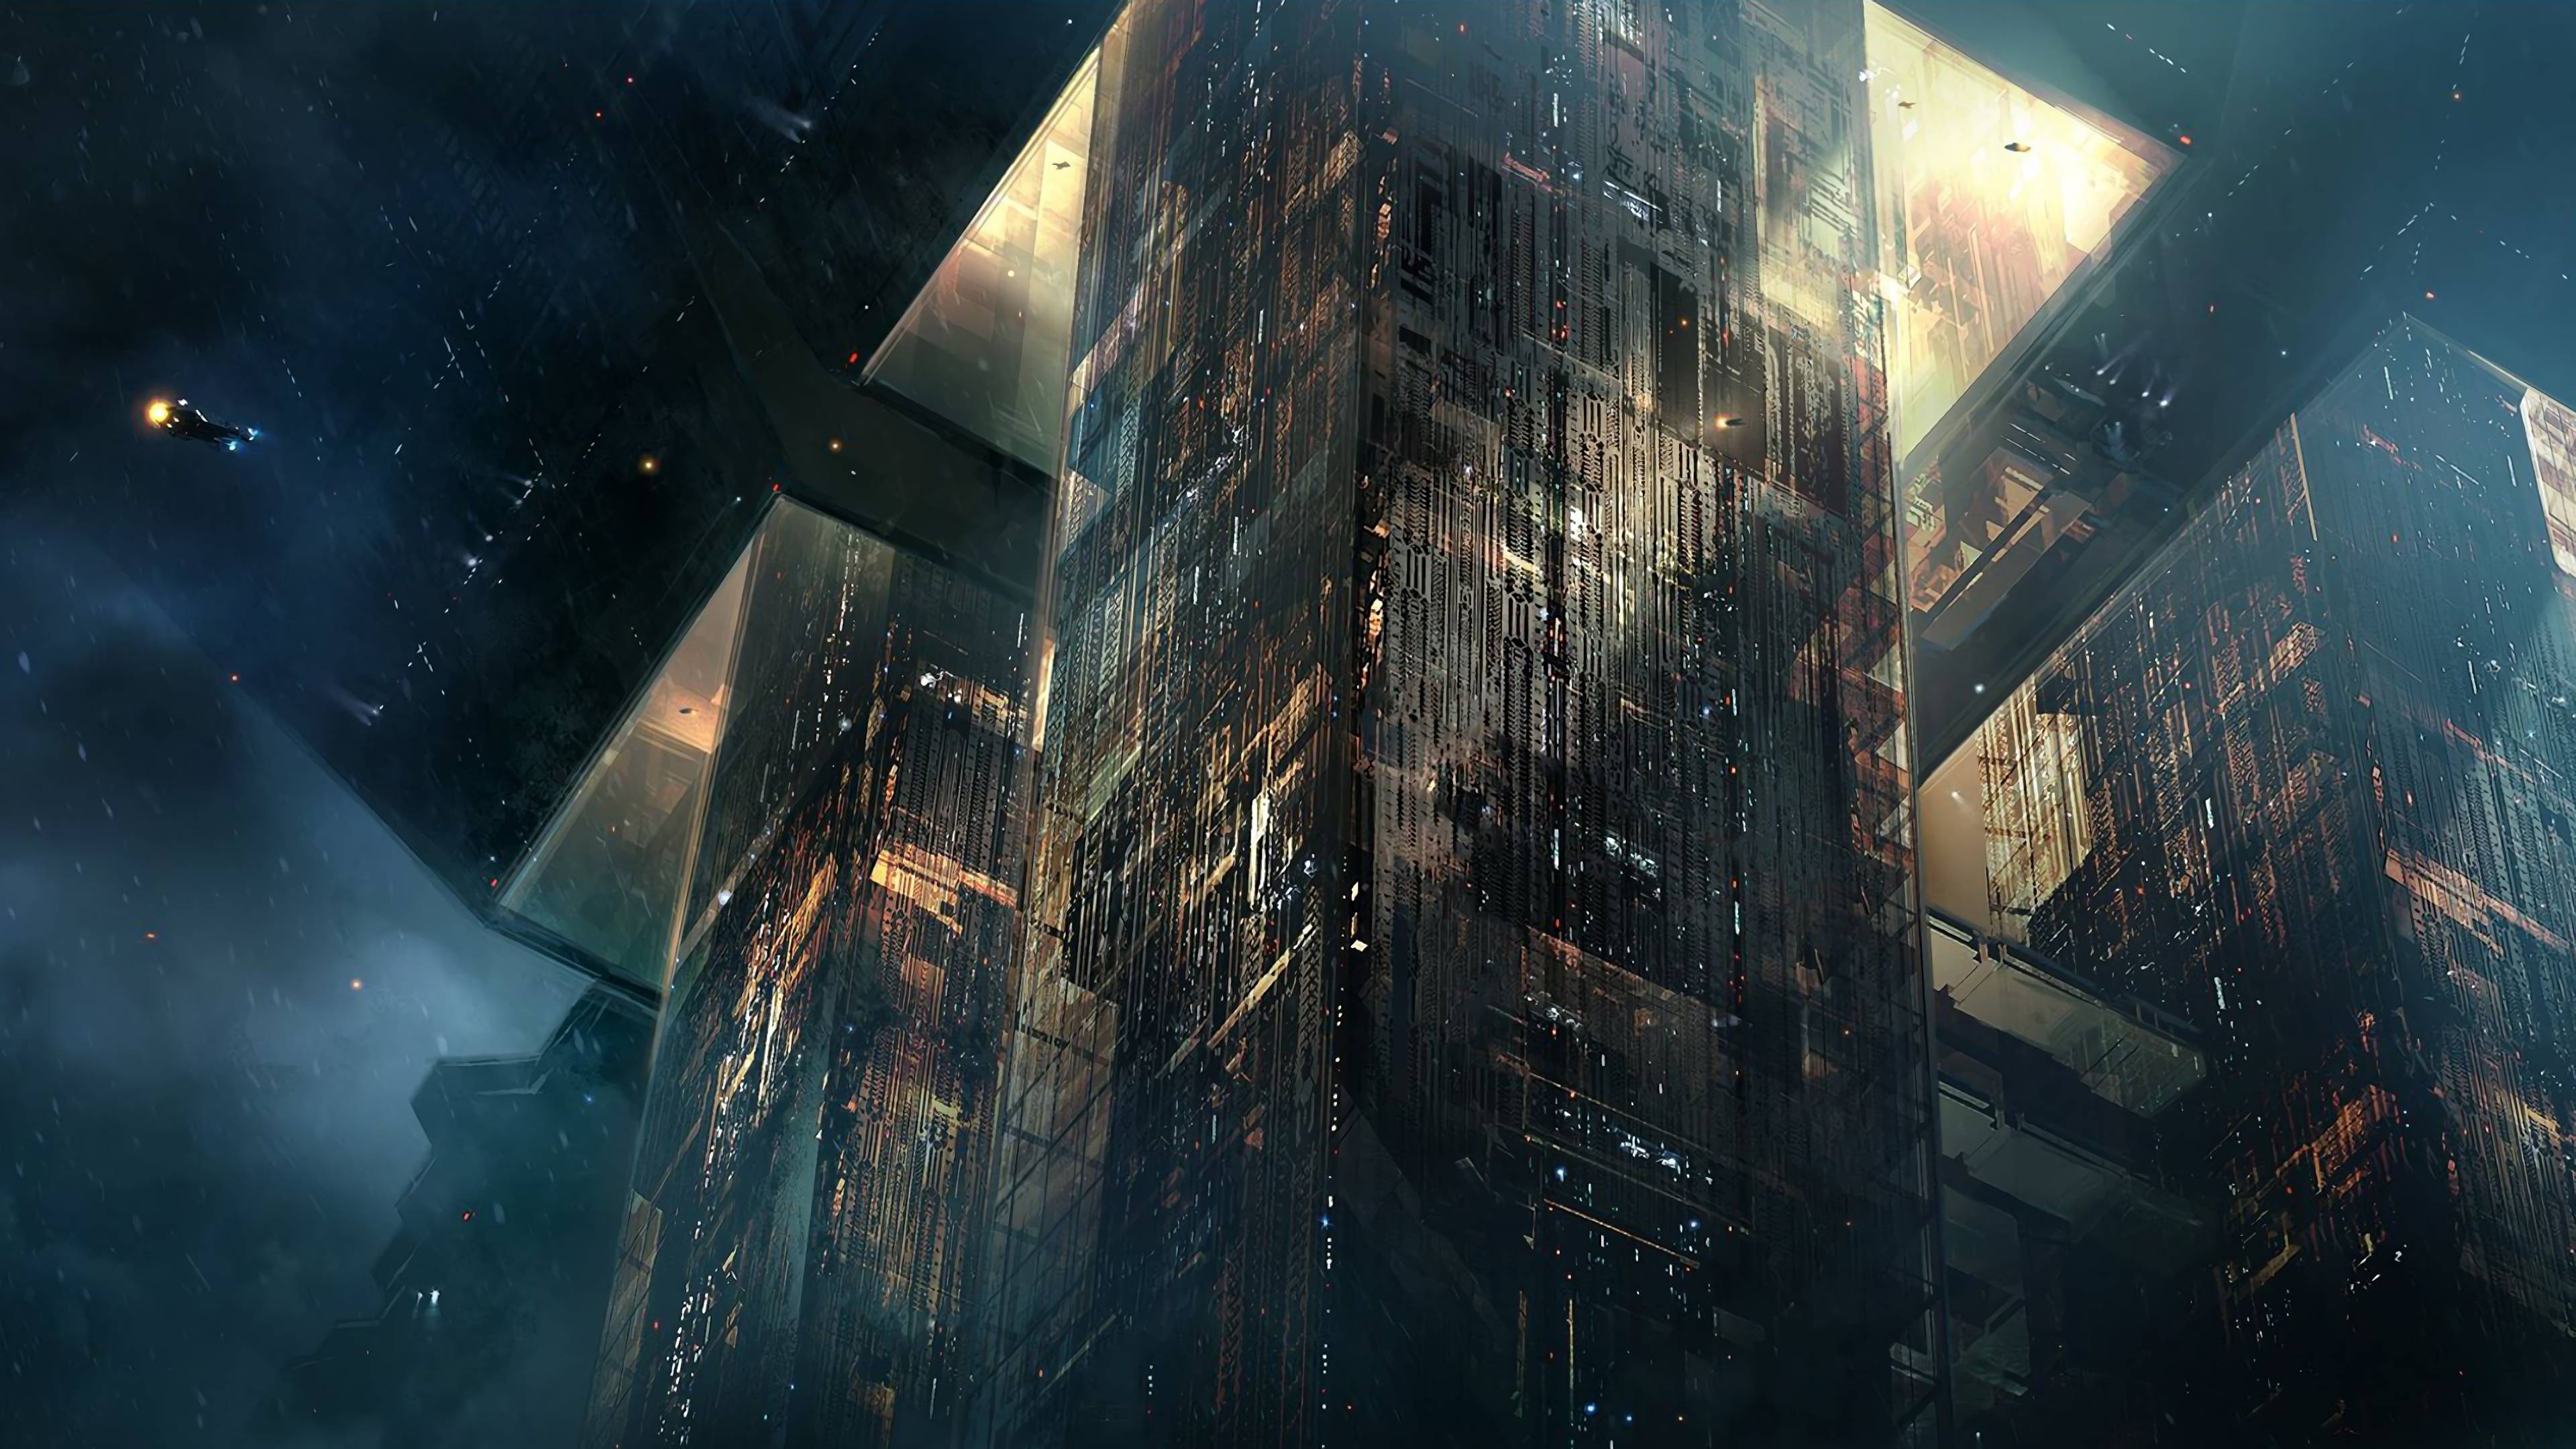 Blade Runner 4K UHD Wallpapers - Top Free Blade Runner 4K UHD